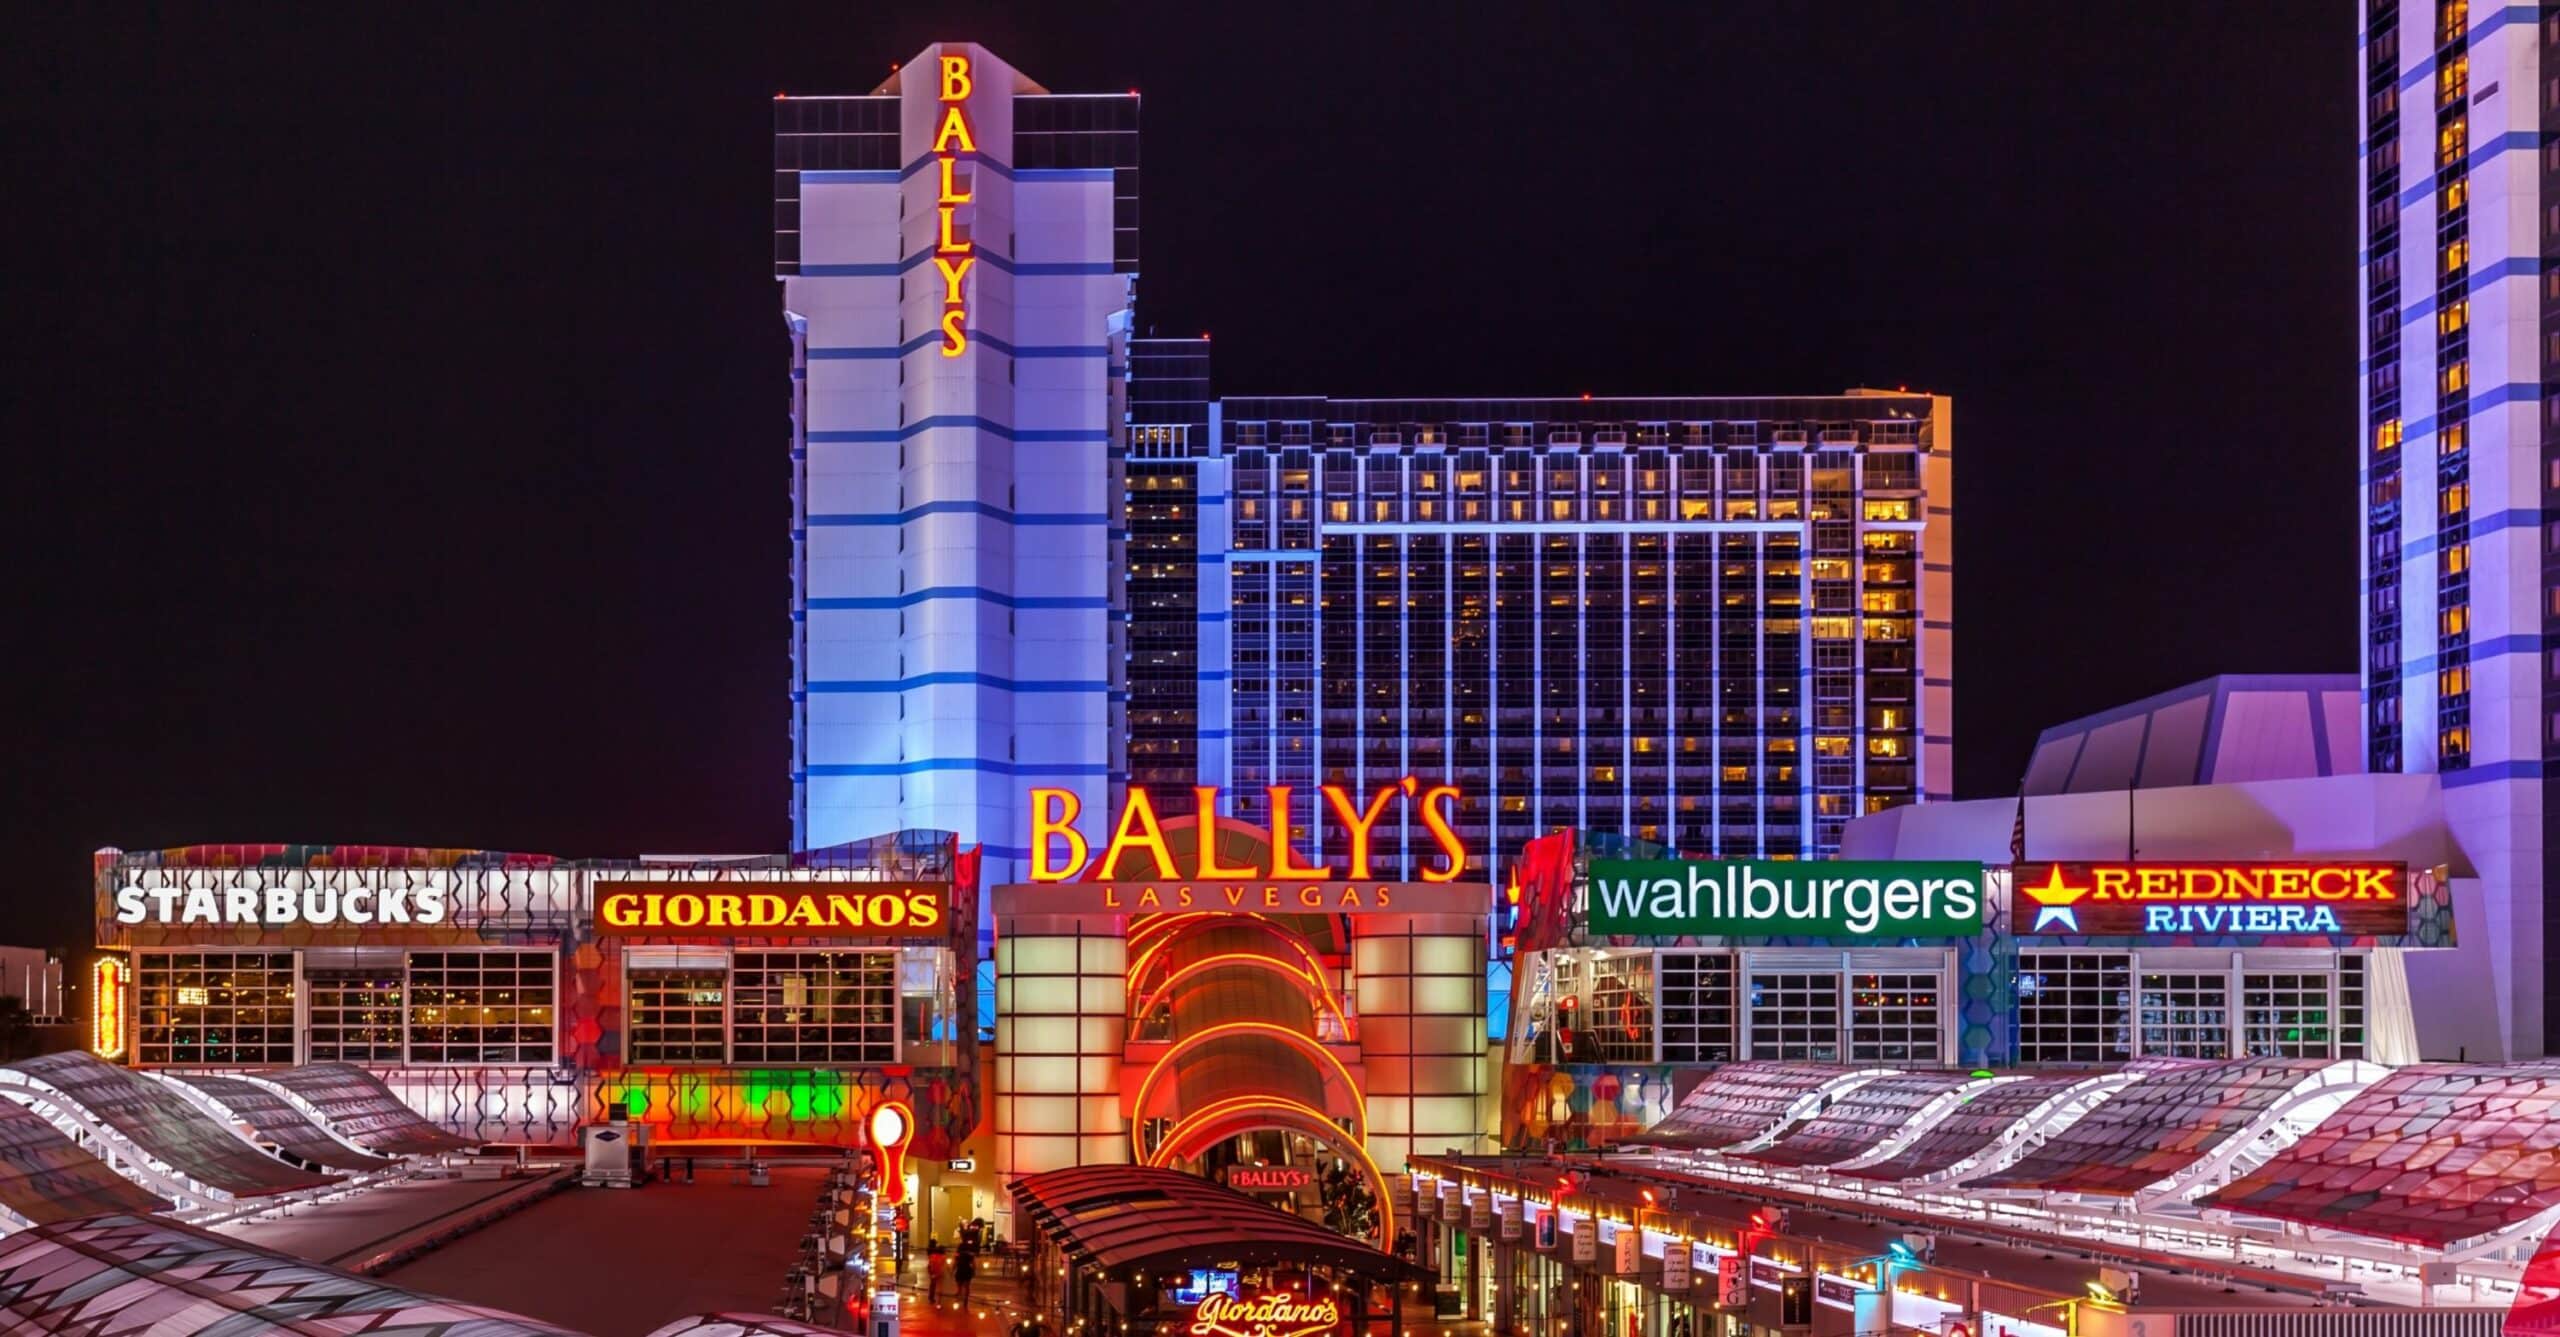 exterior shot of Bally's casino